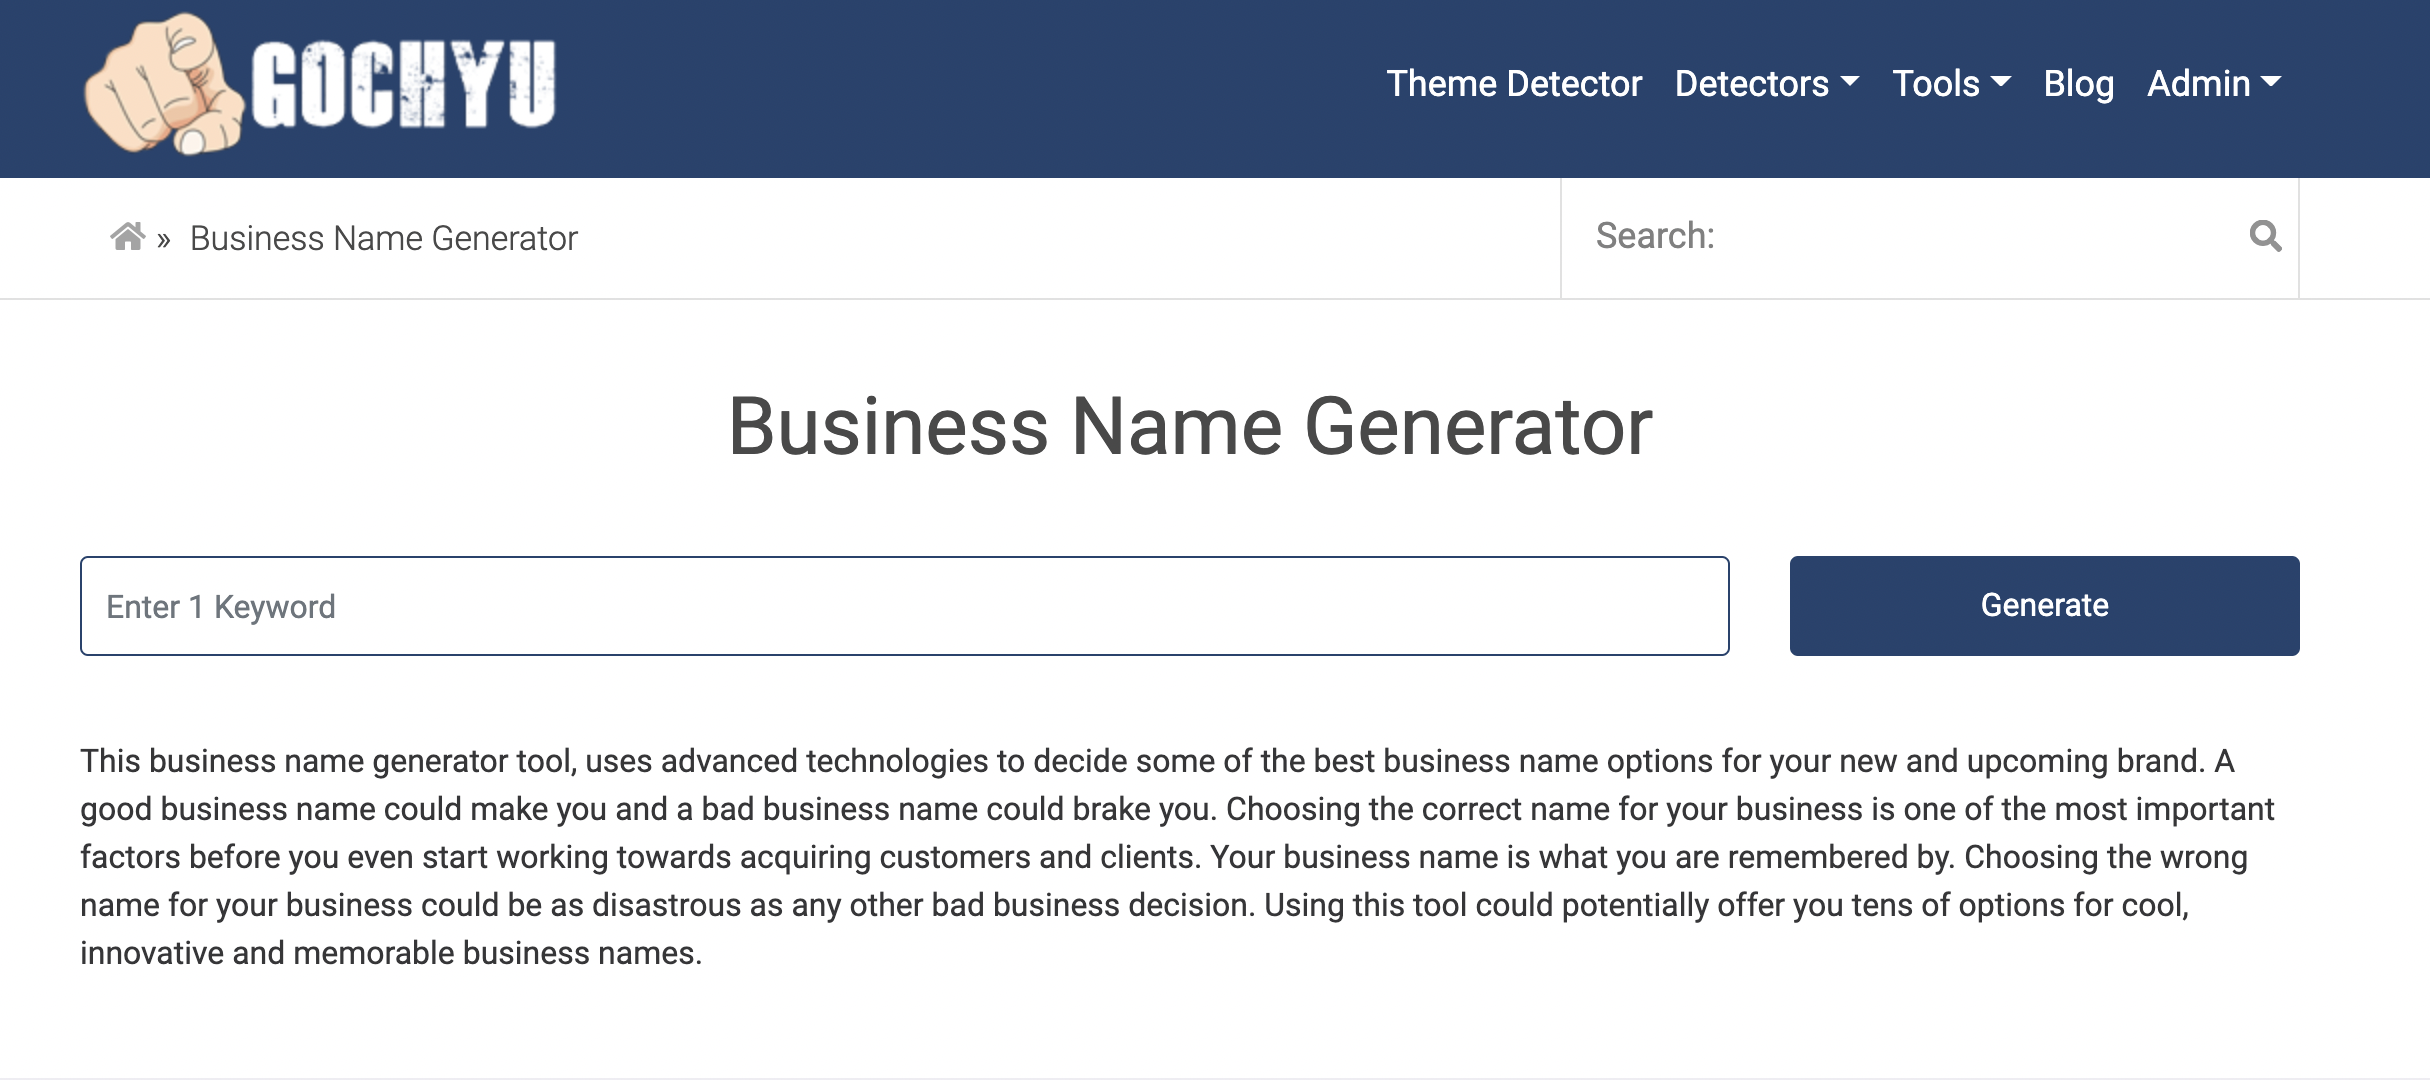 Gochyu business name generator